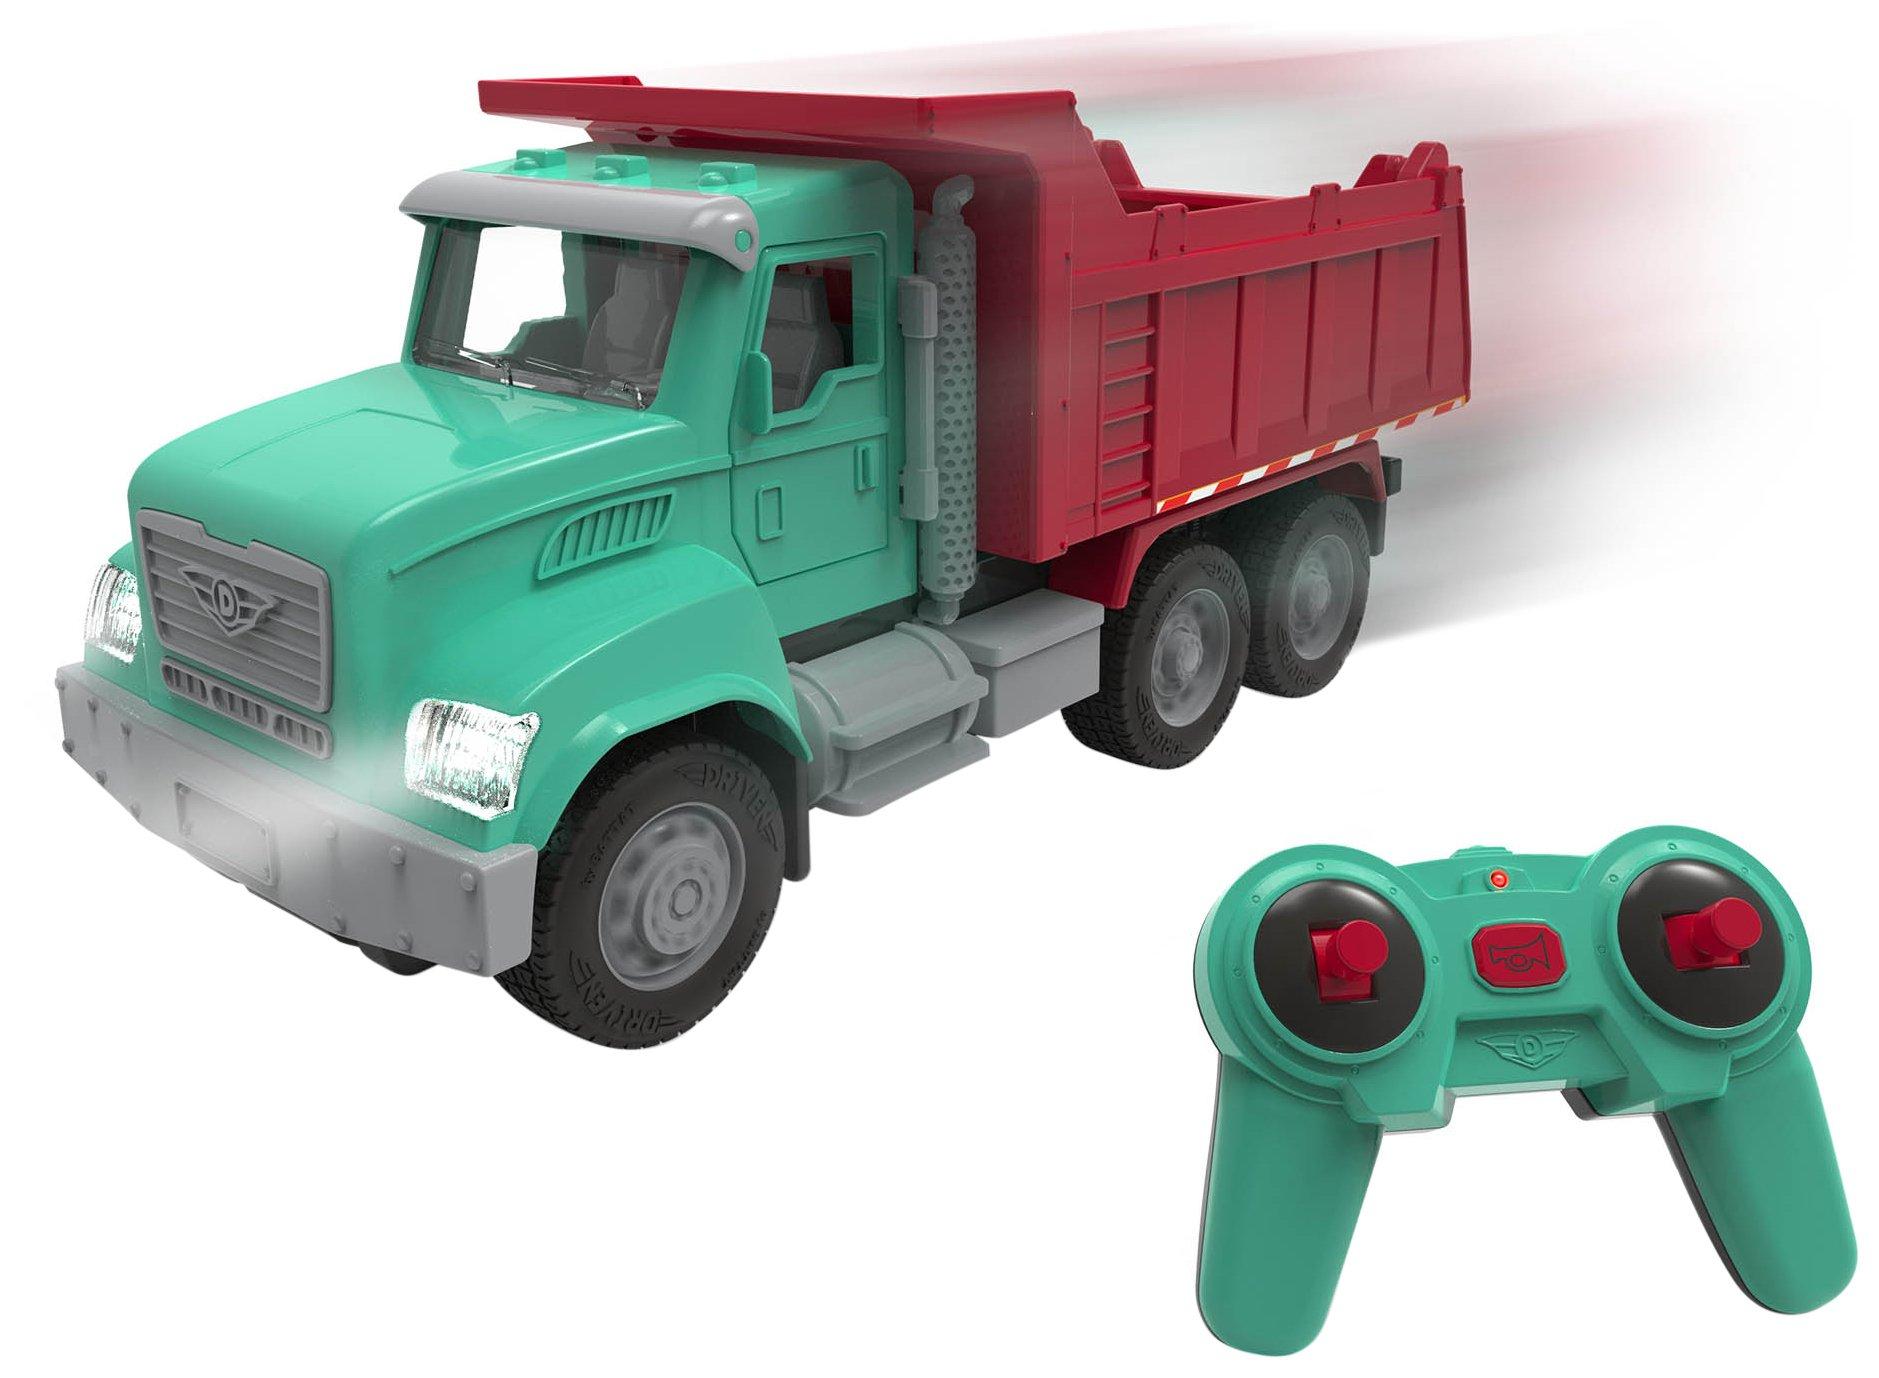 R/C Micro Dump Truck Toy Playset